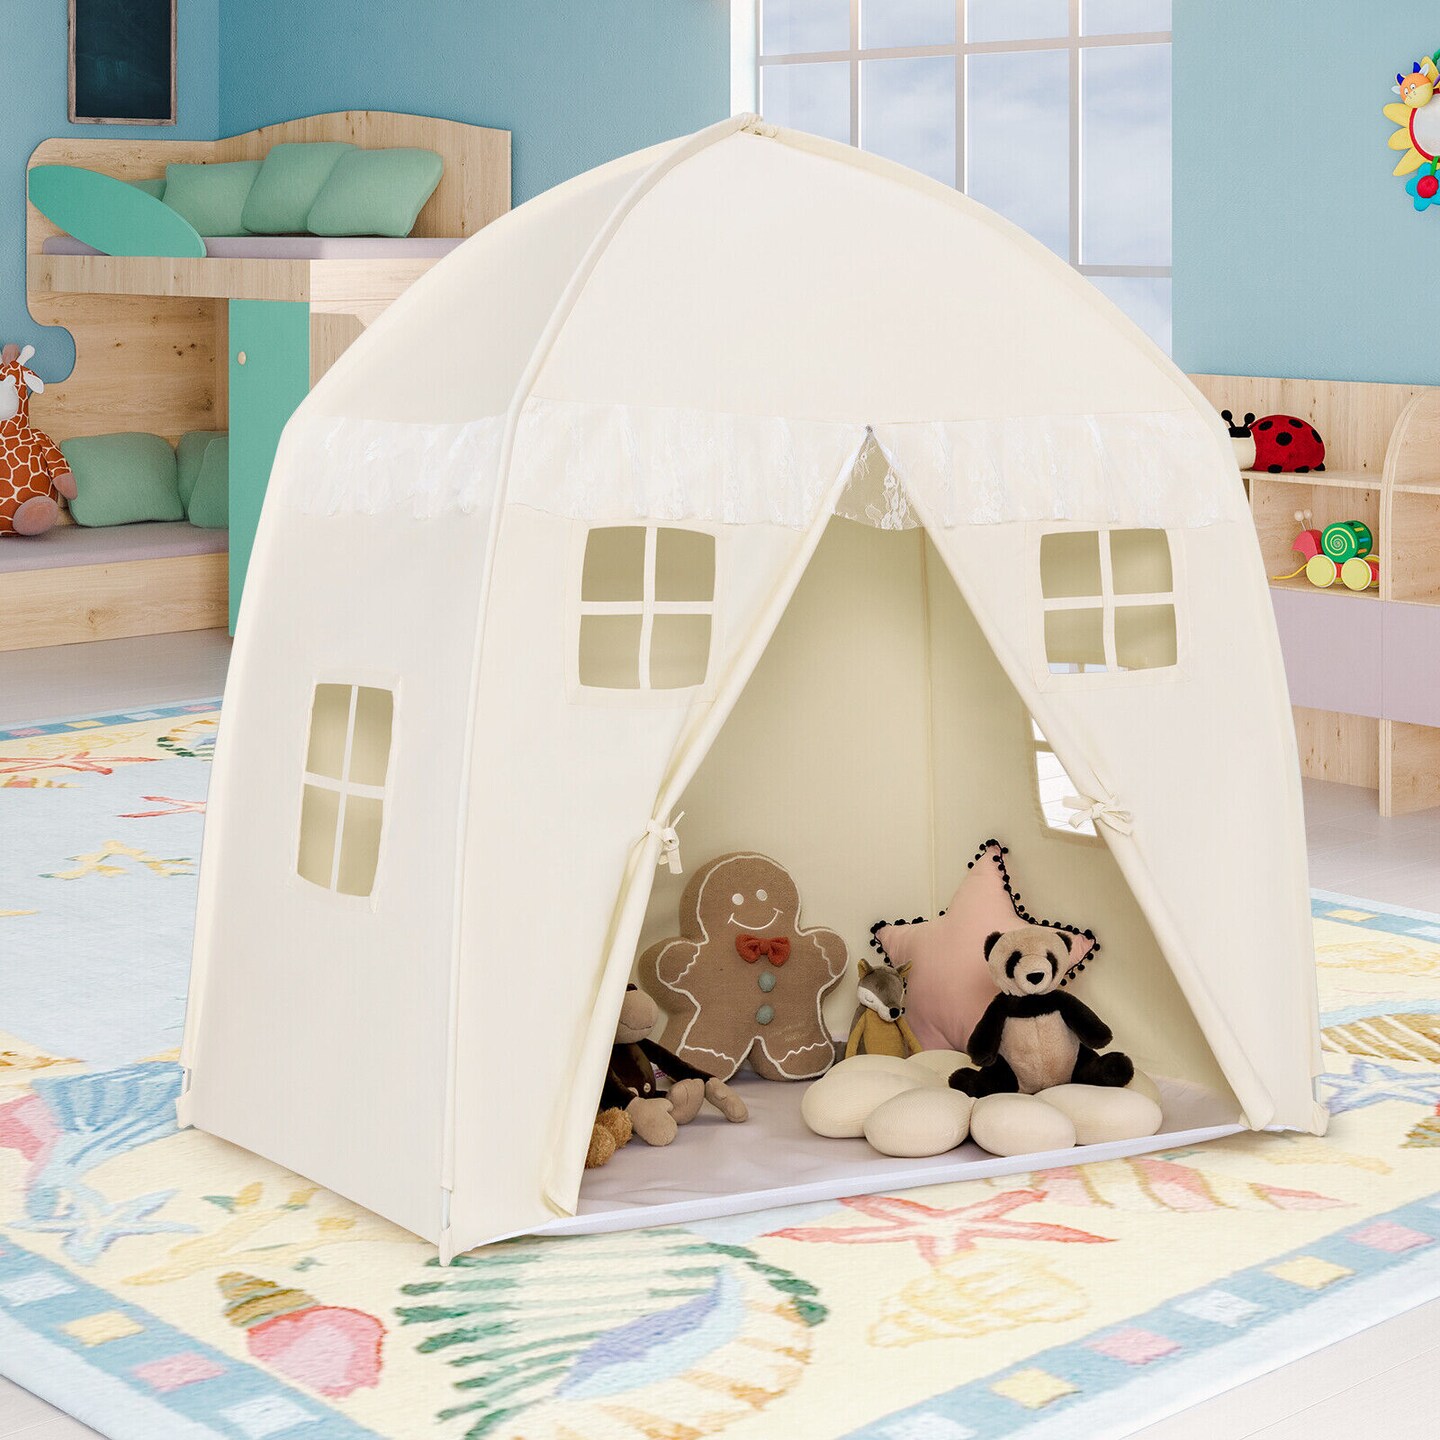 Portable Indoor Kids Play Castle Tent